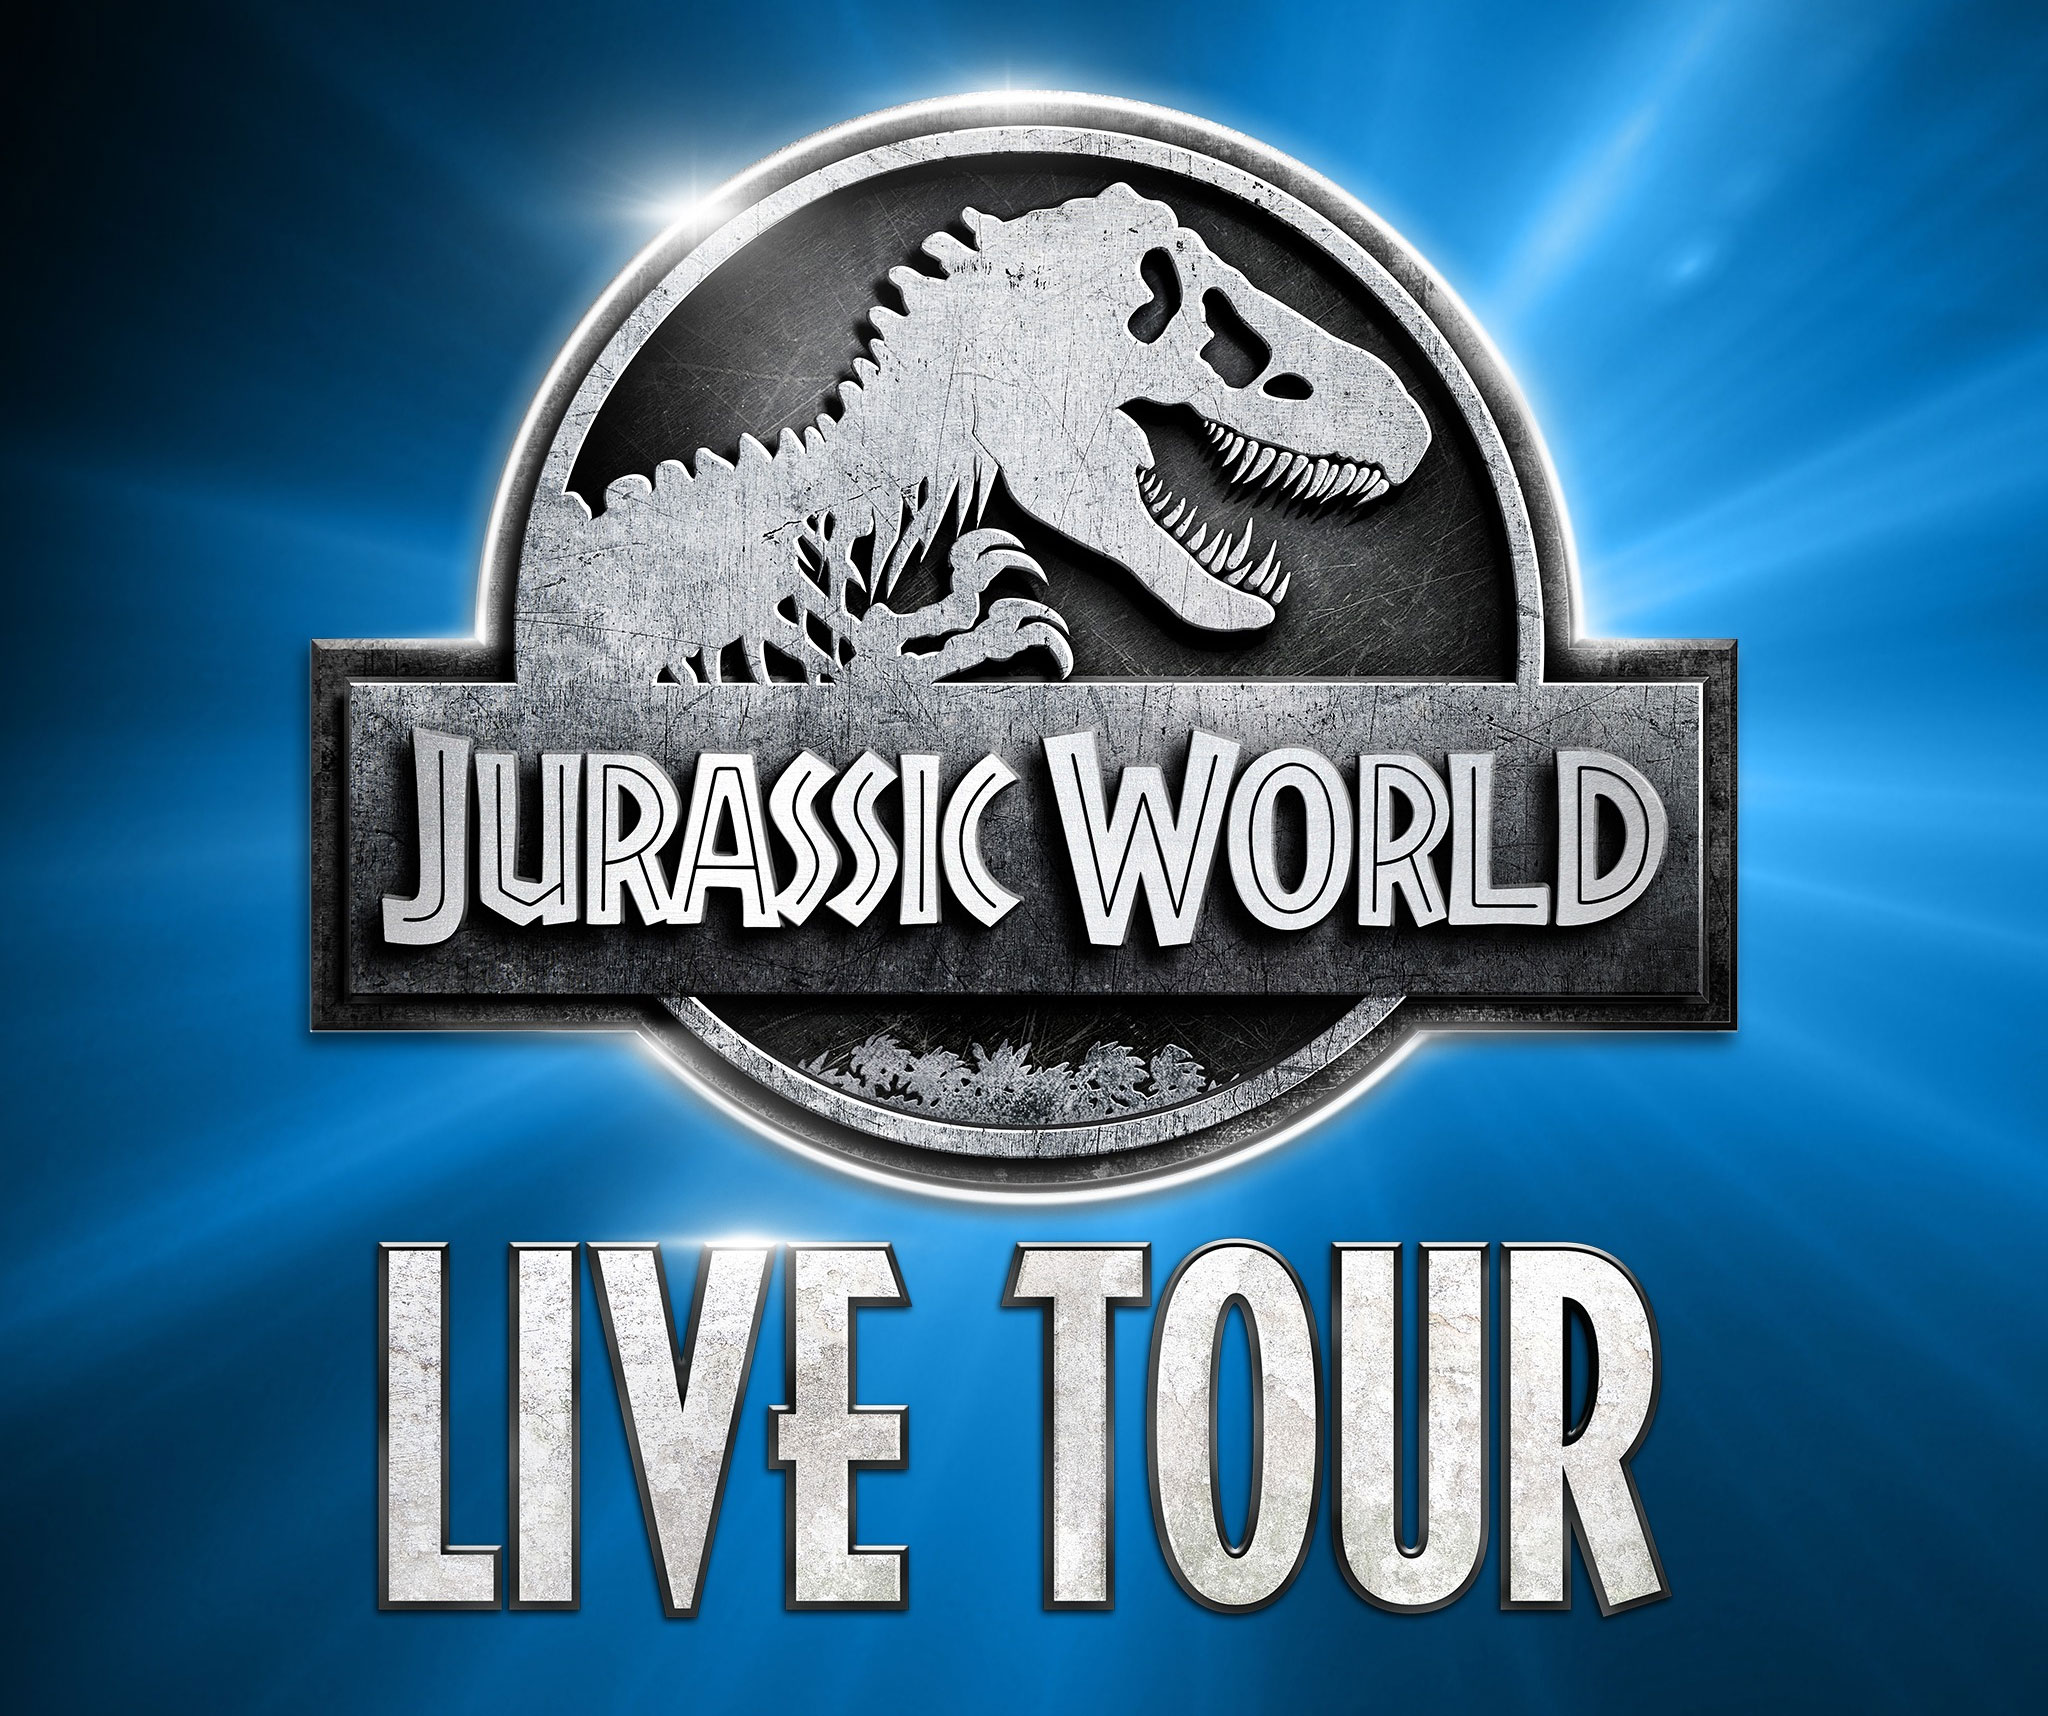 Jurassic World Live Tour Comes to the XL Center Hartford